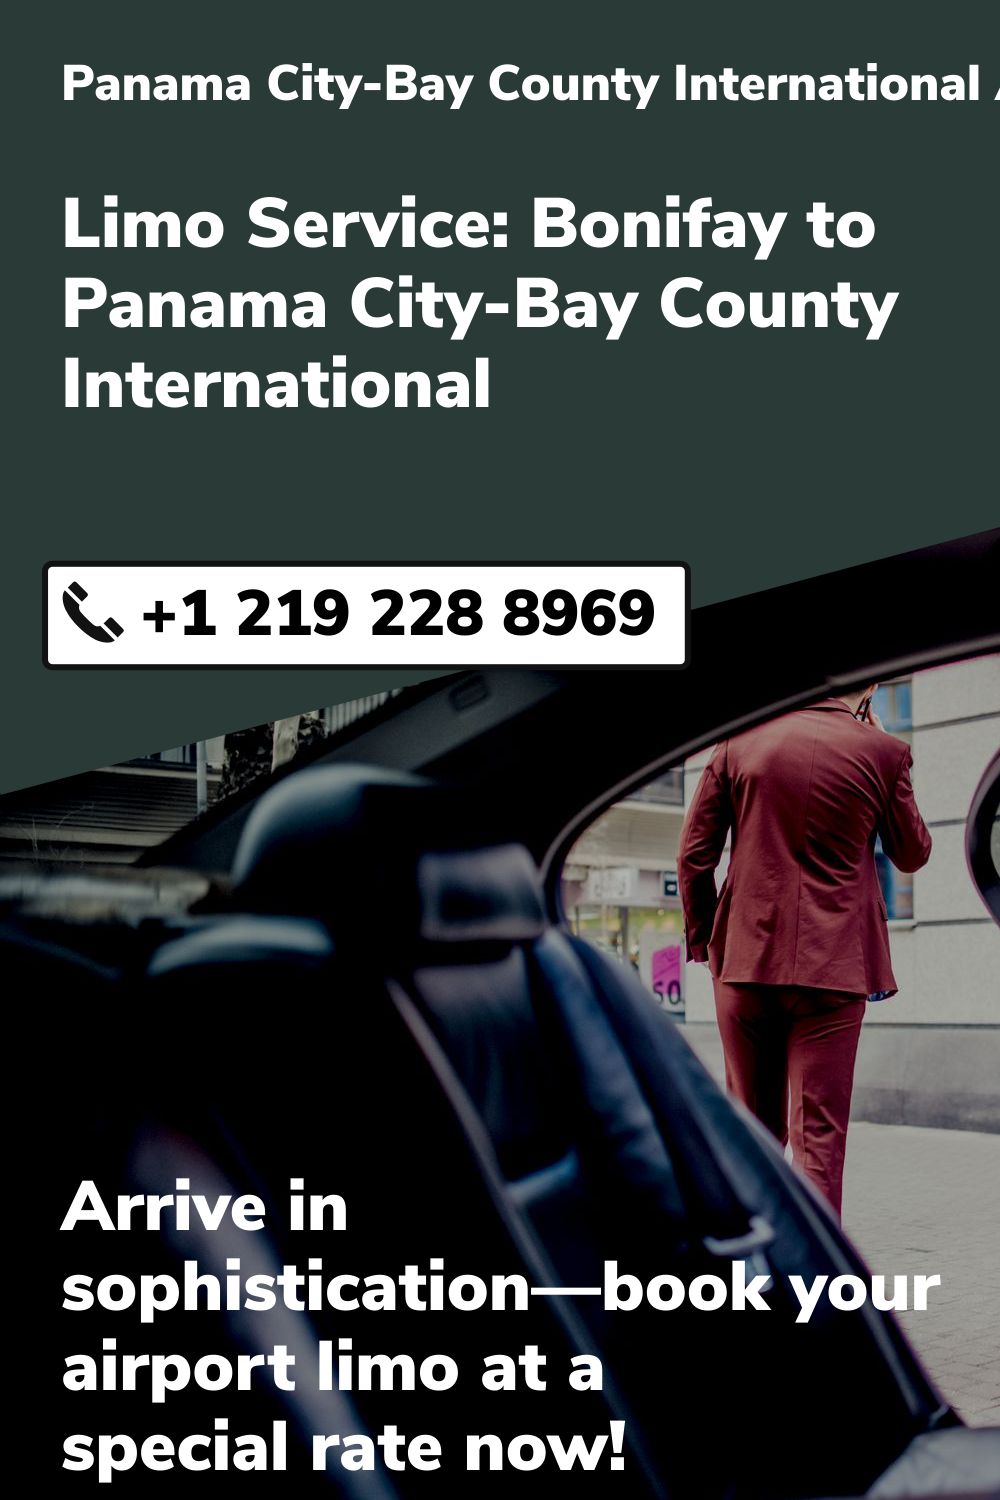 Panama City-Bay County International Airport Limo